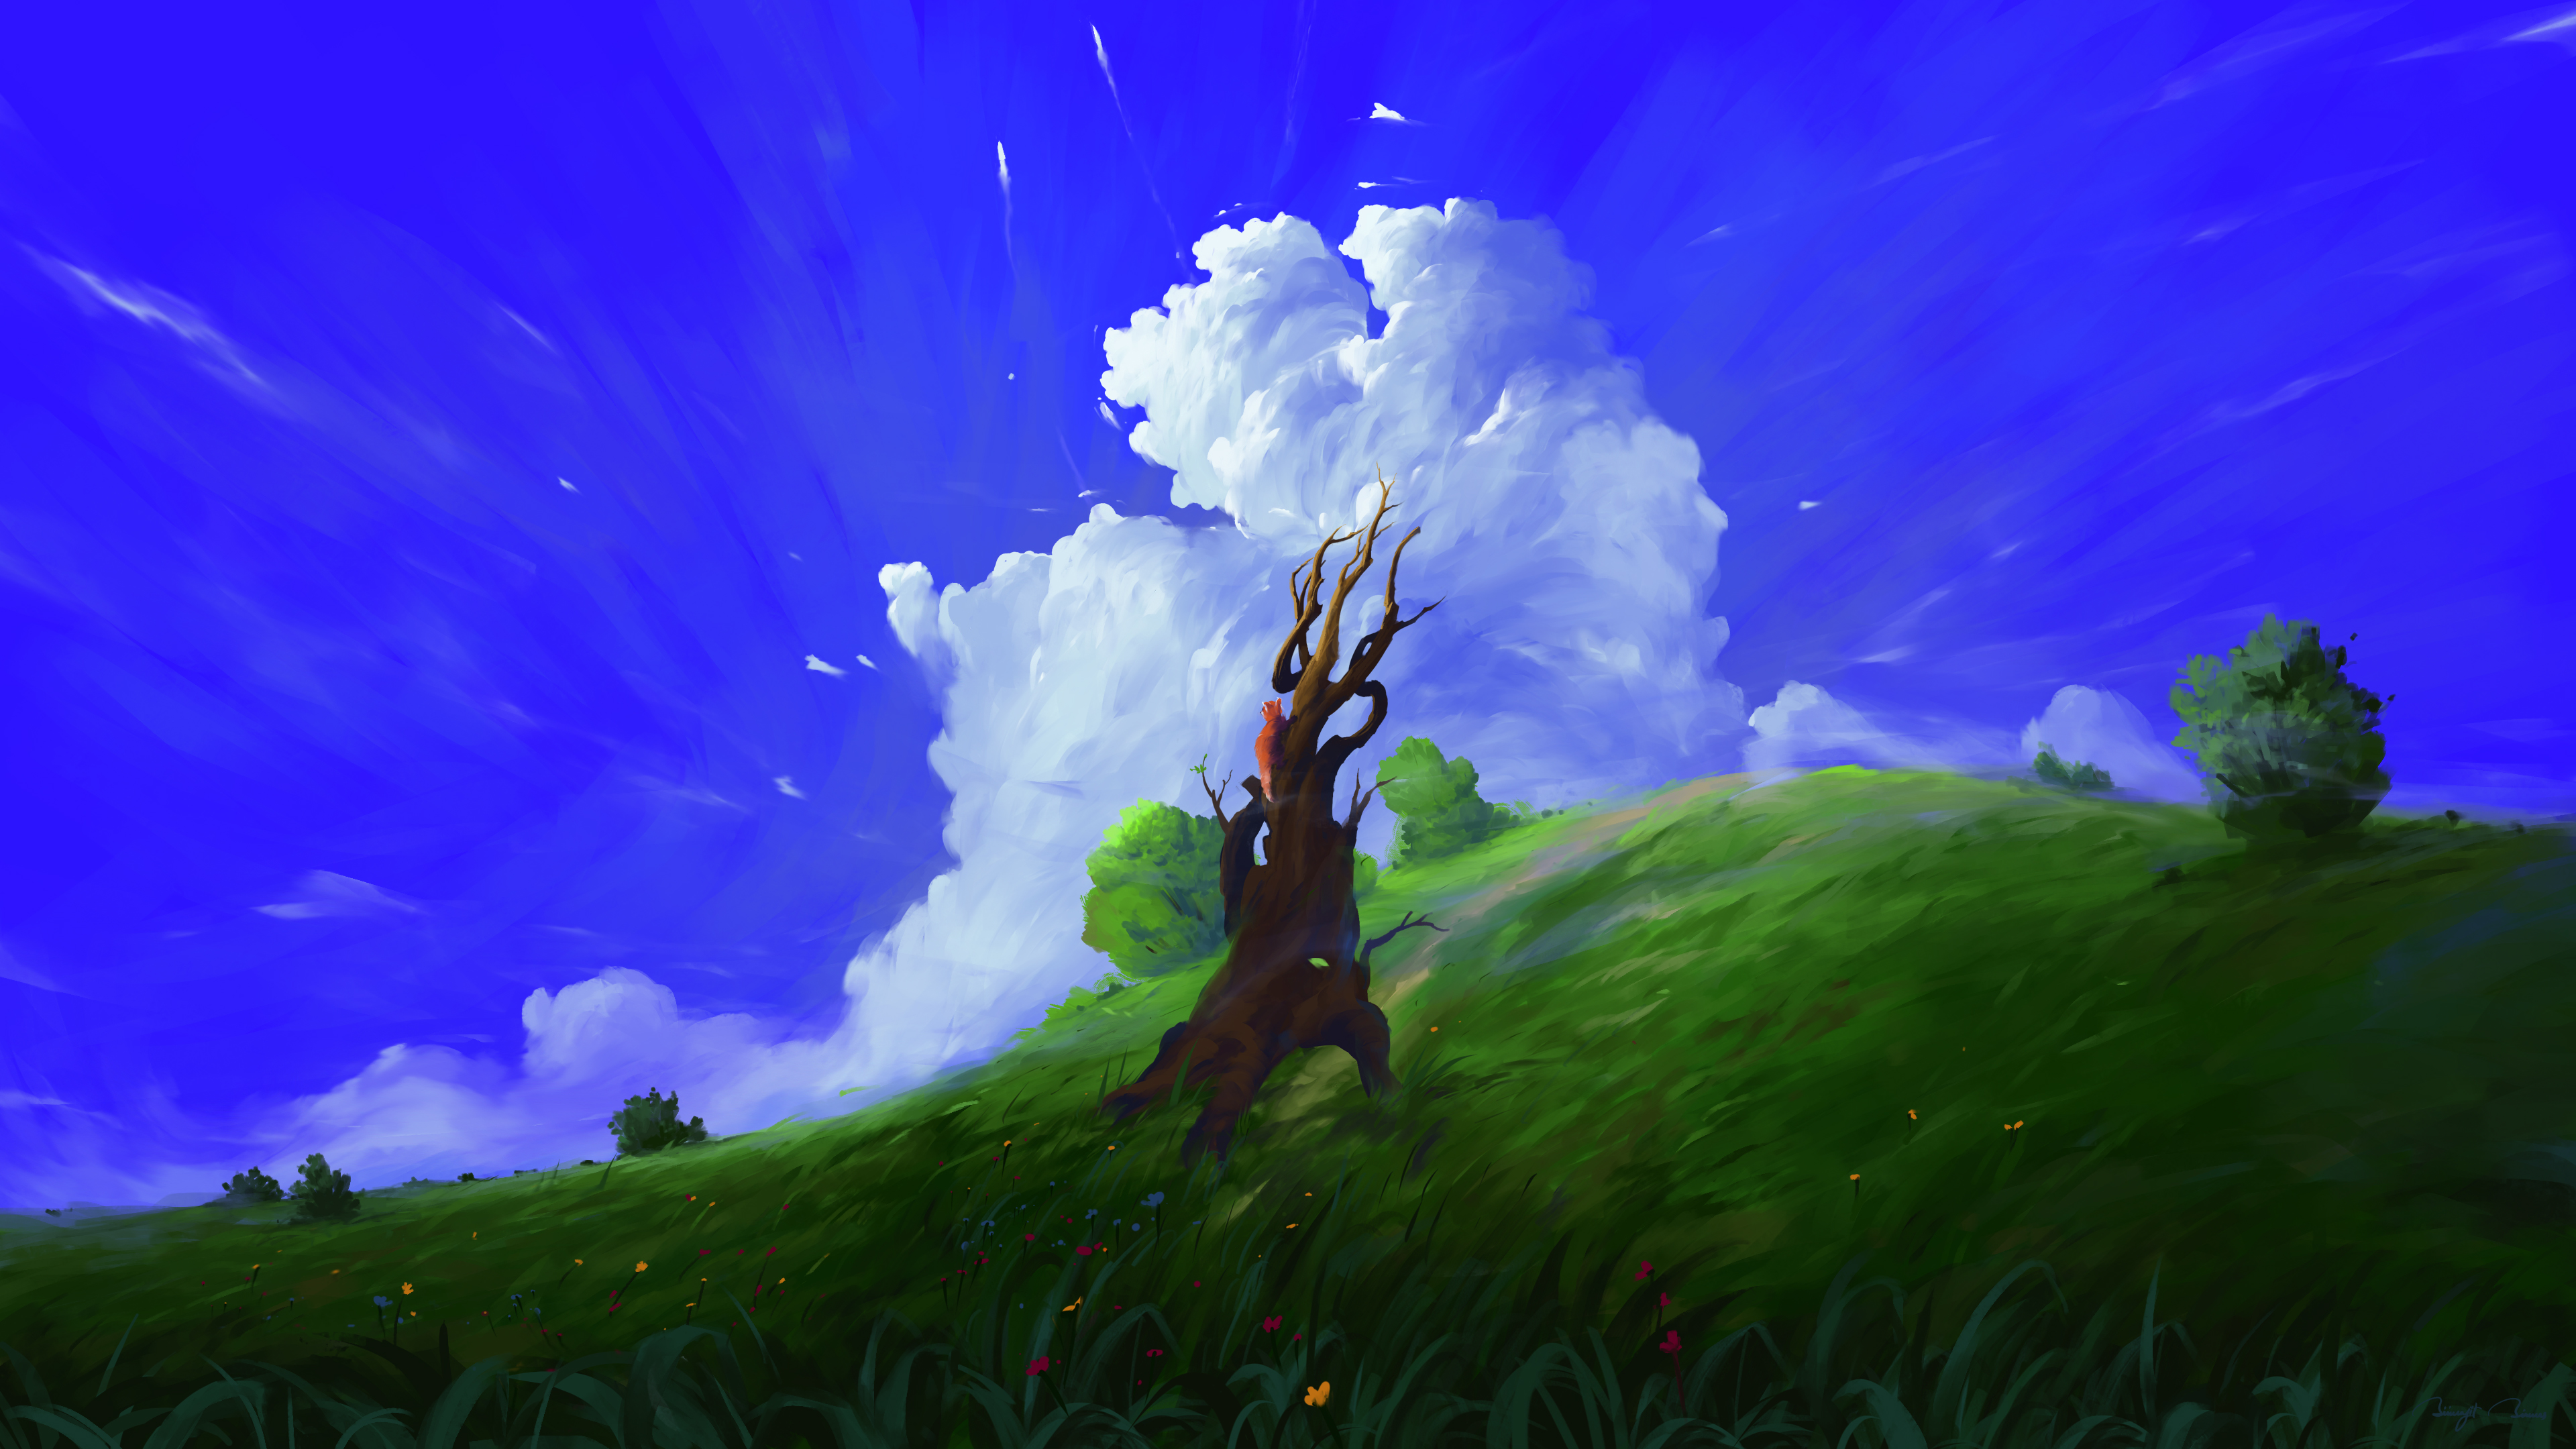 BisBiswas Landscape Clouds Blue Trees Plants Digital Art Artwork Illustration Painting 4K Signature 3840x2160